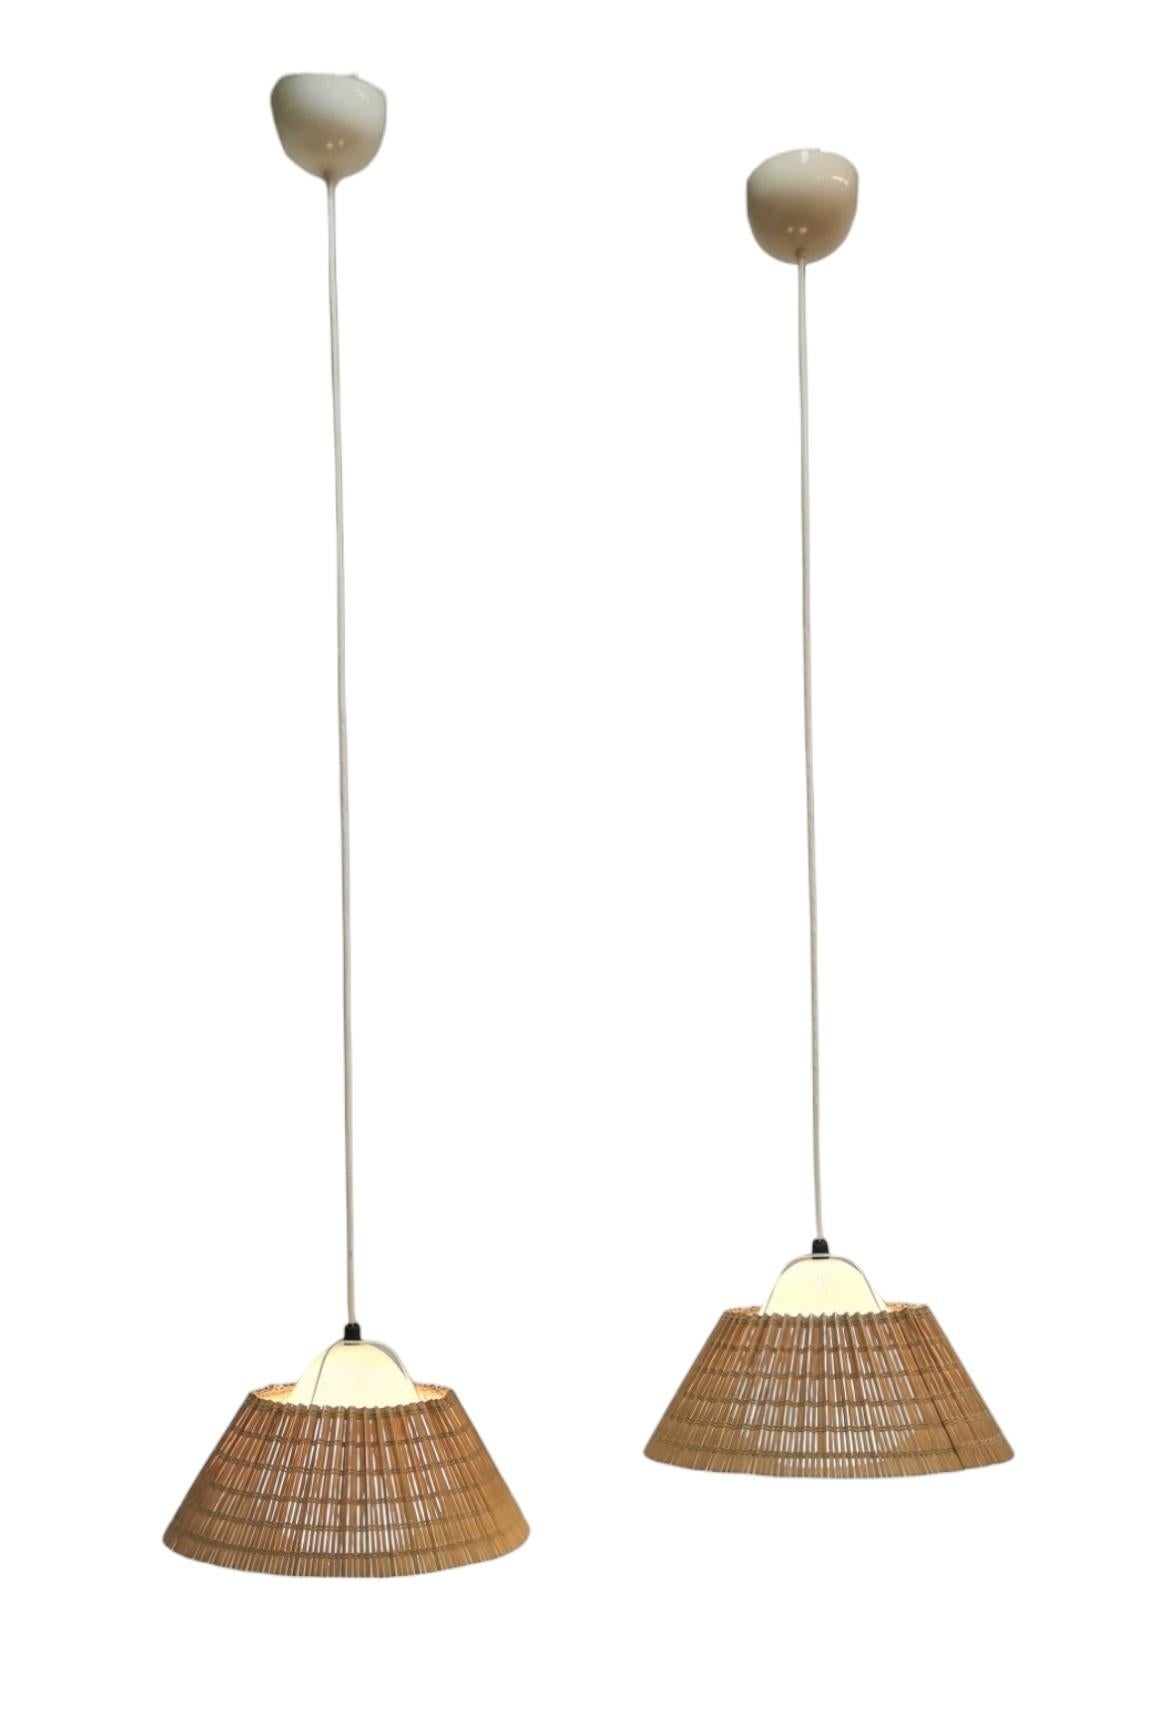 Lisa Johansson Pape, Pair of Ceiling Lamp Model 982, Stockmann For Sale 2